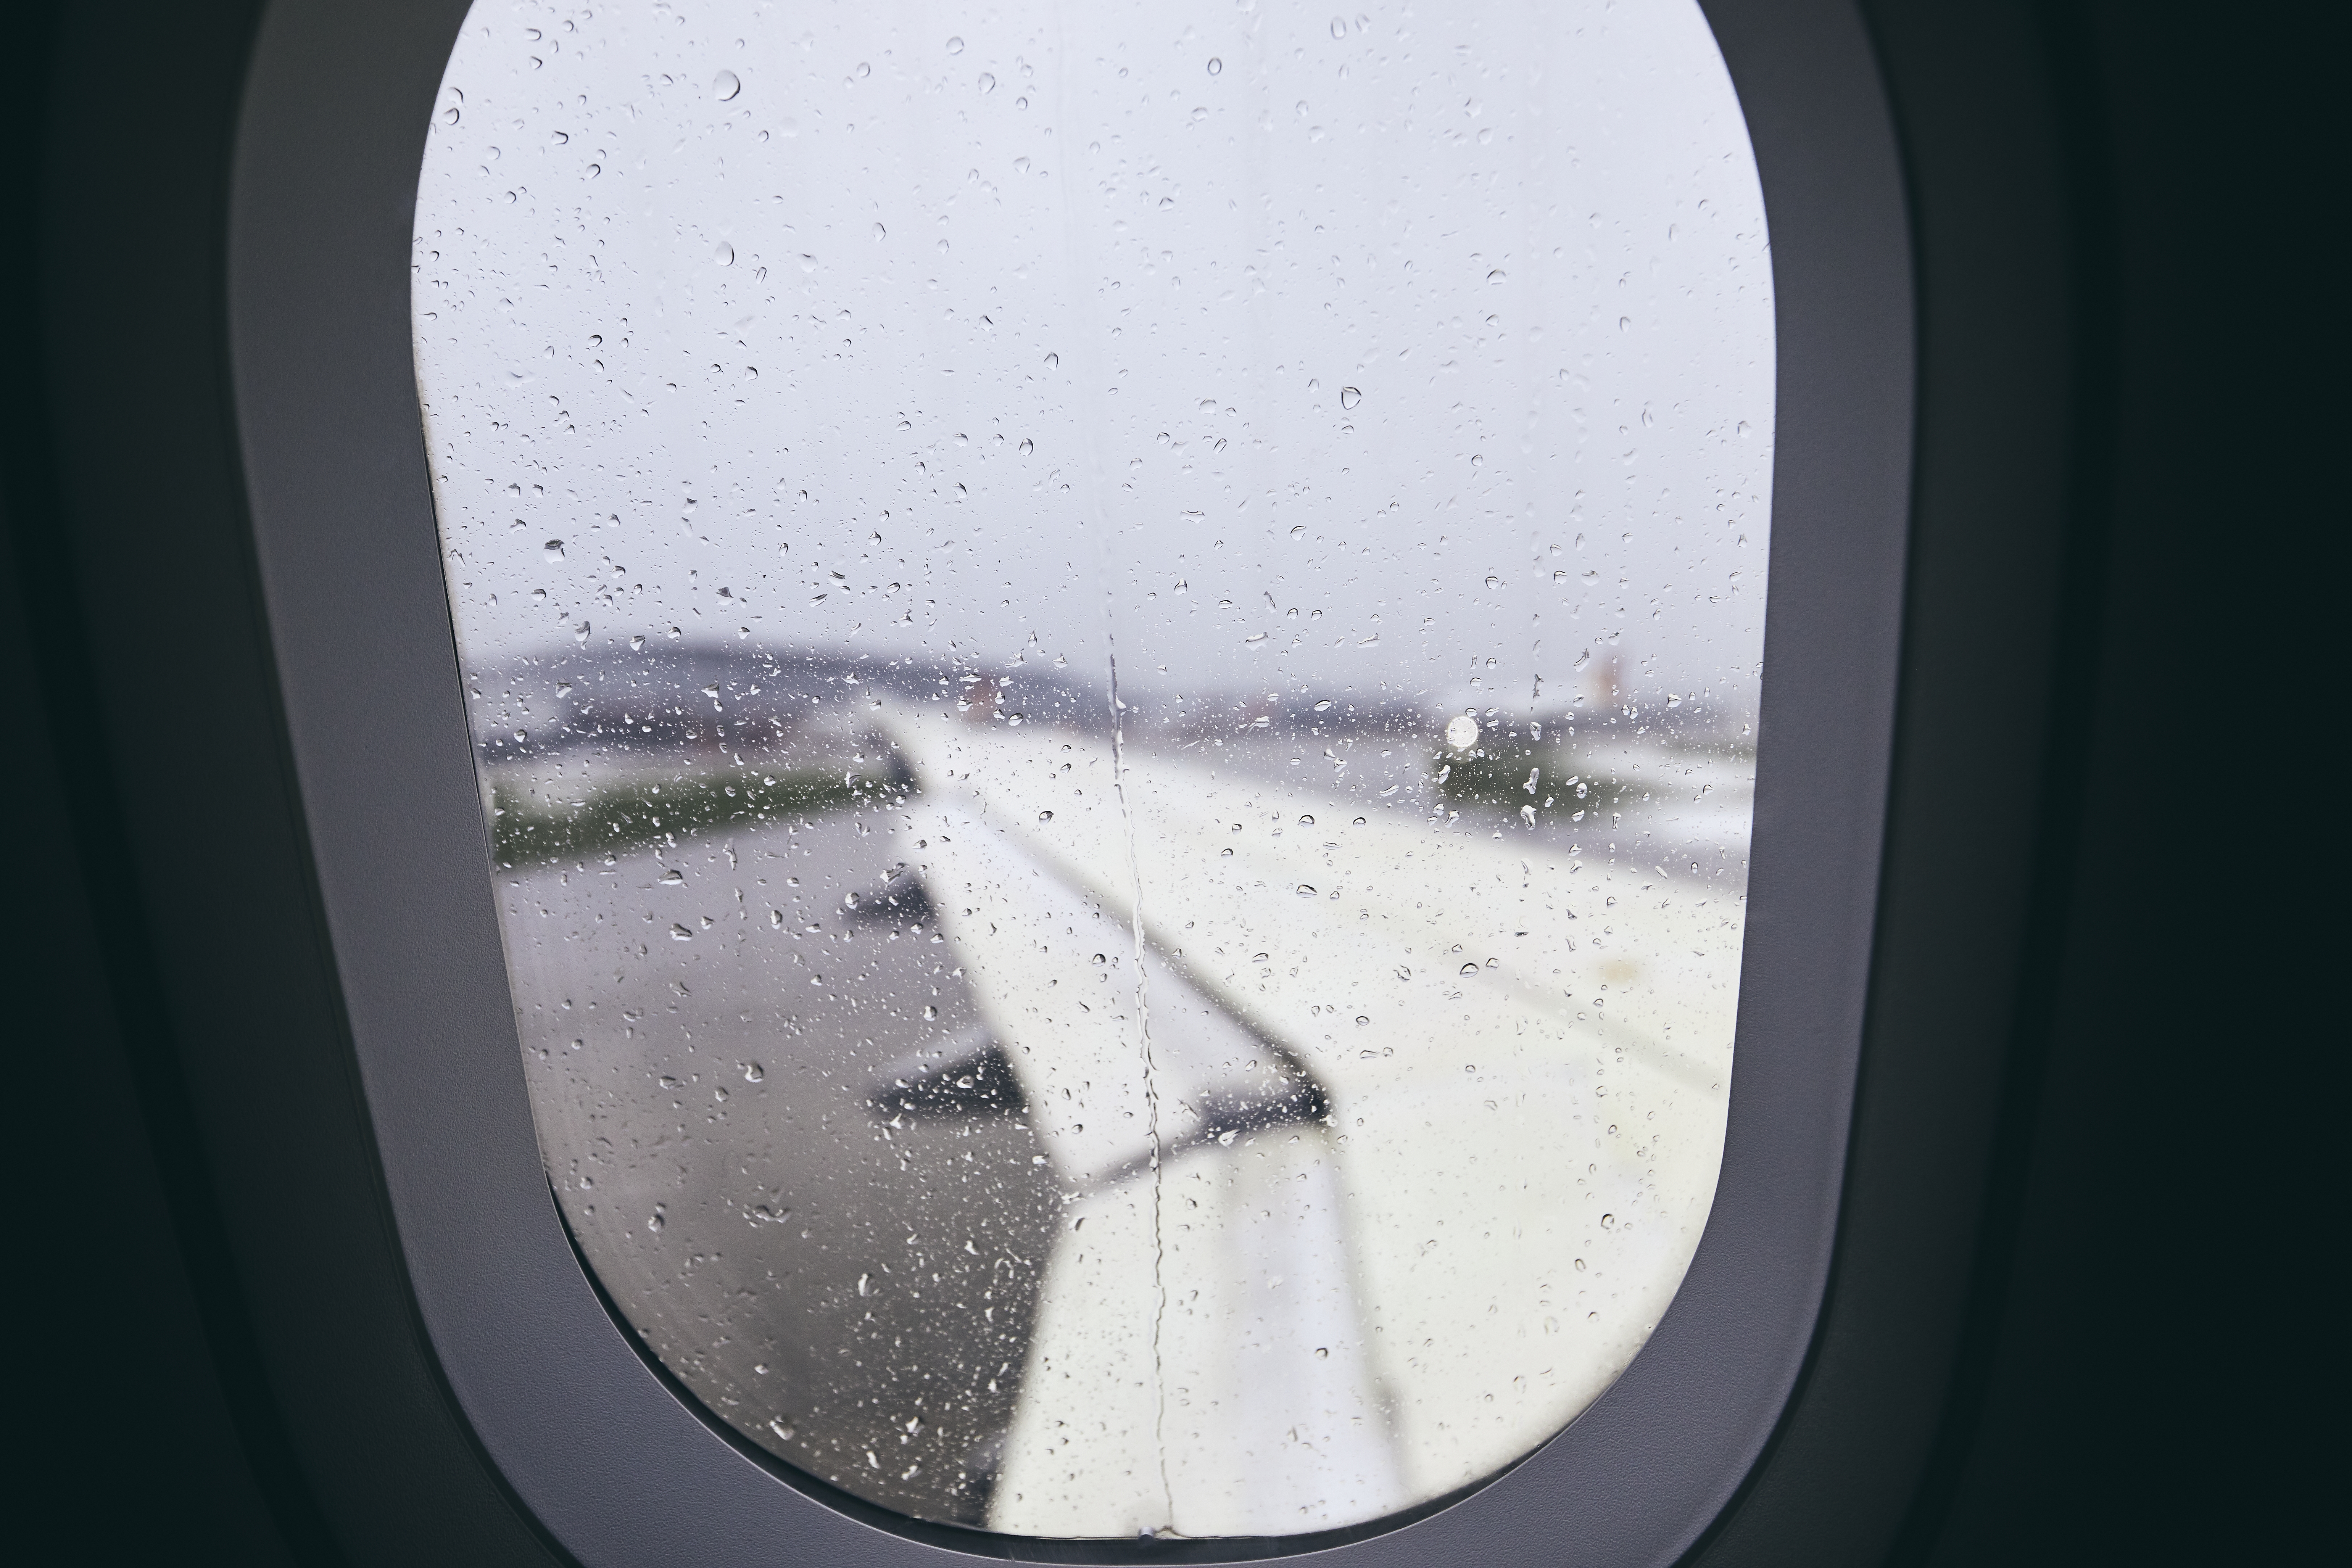 Airplane window during rain